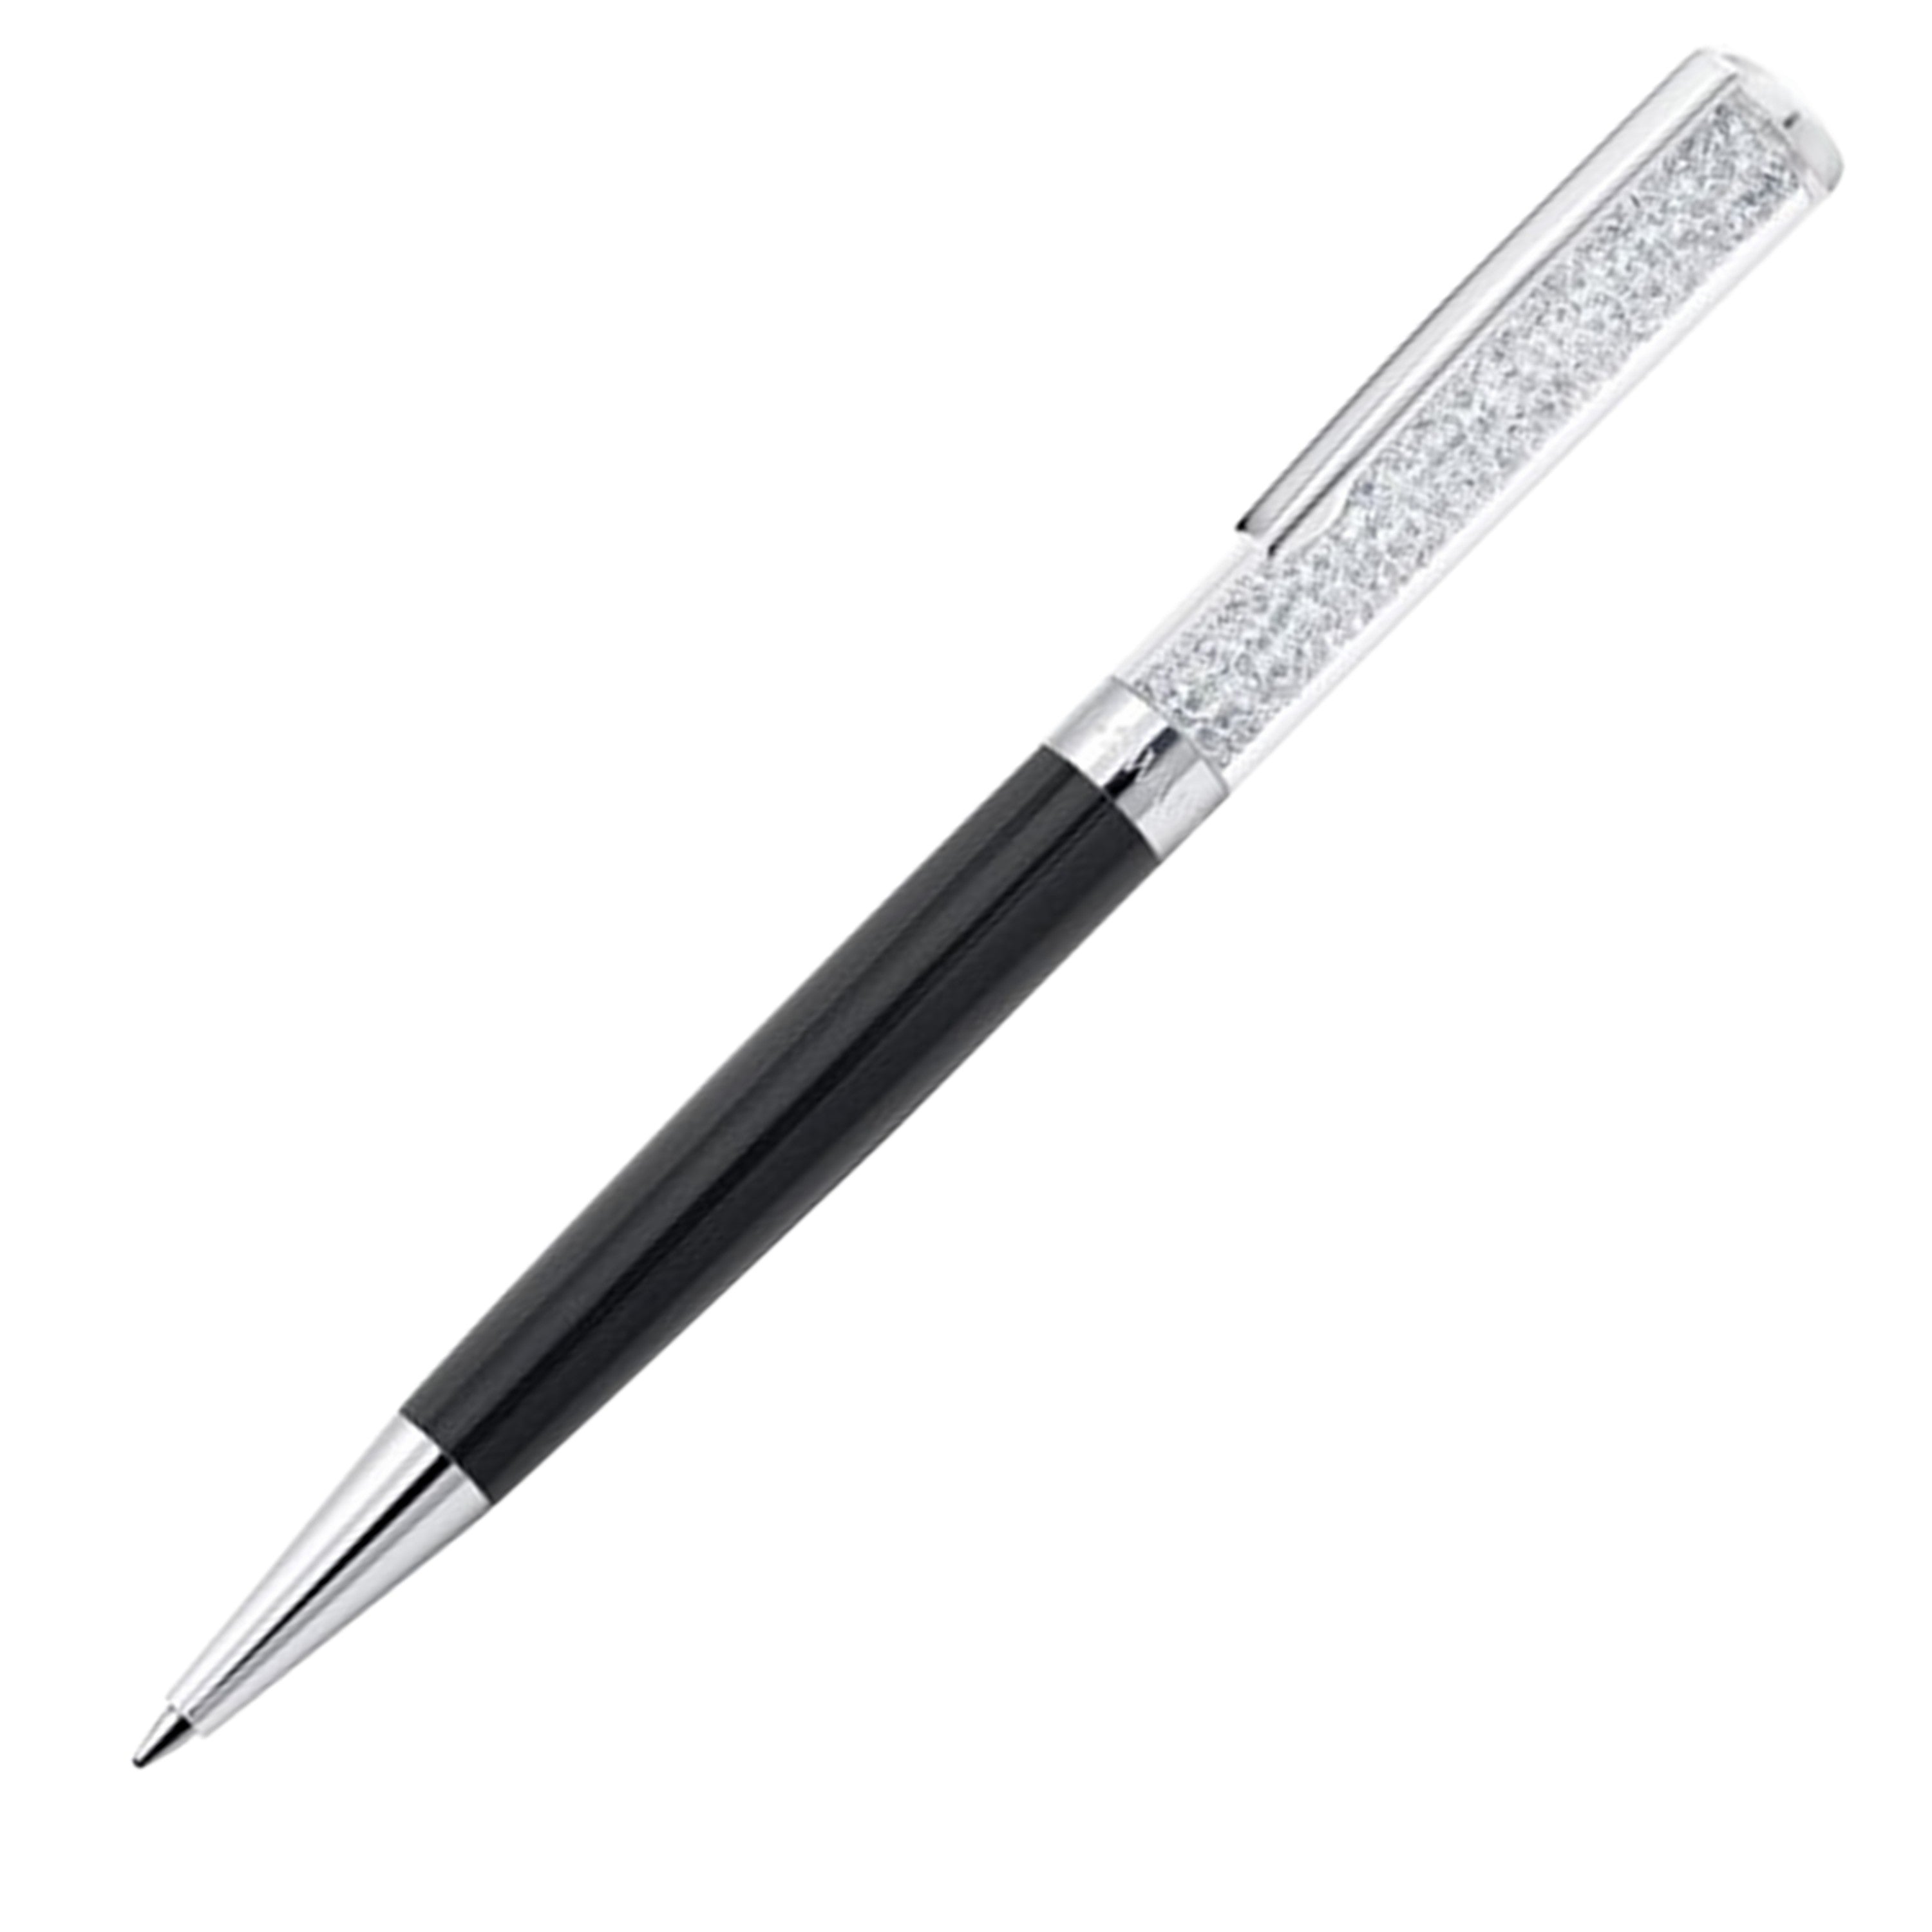 Crystalline Ballpoint Pen with Crystals from Swarovski®